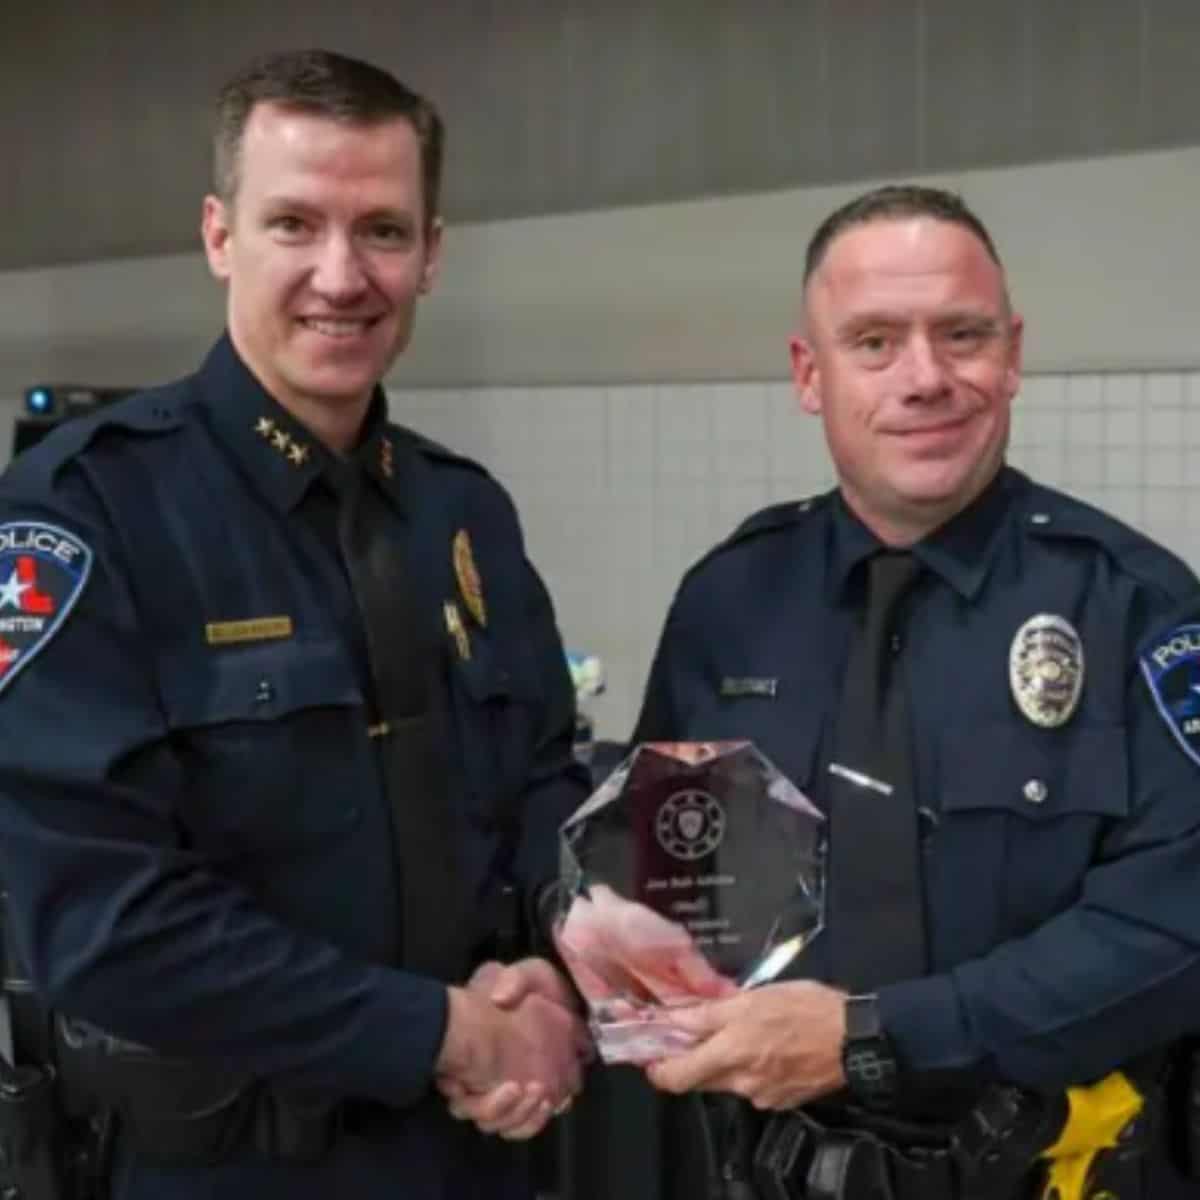 the policeman receives the reward